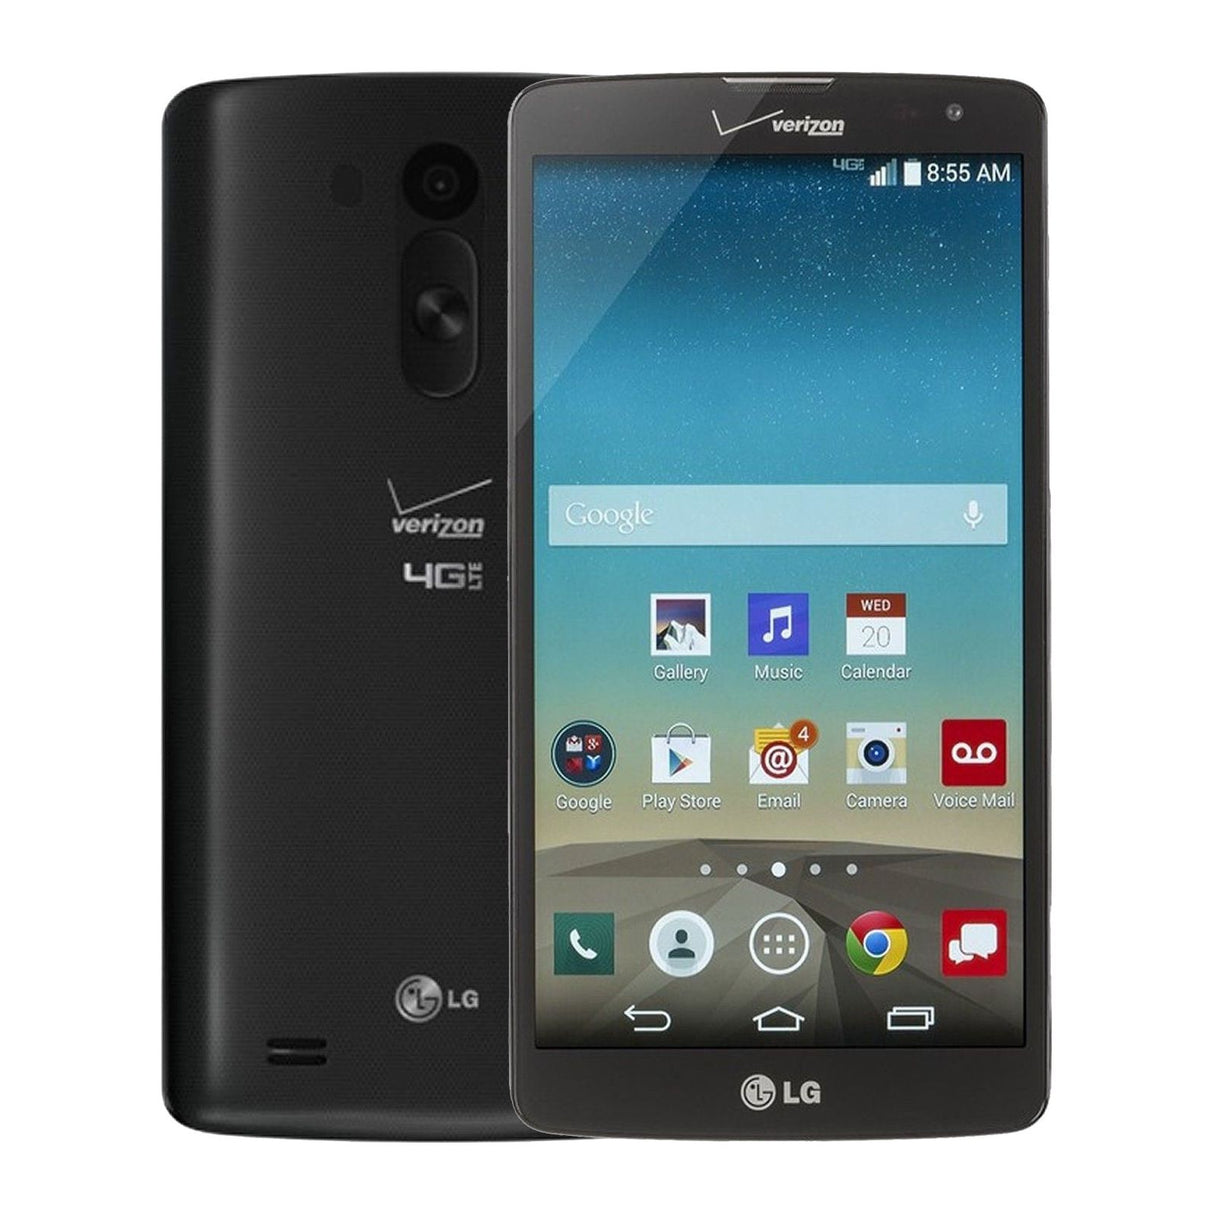 LG G Vista - 8 GB - Black - Verizon - CDMA